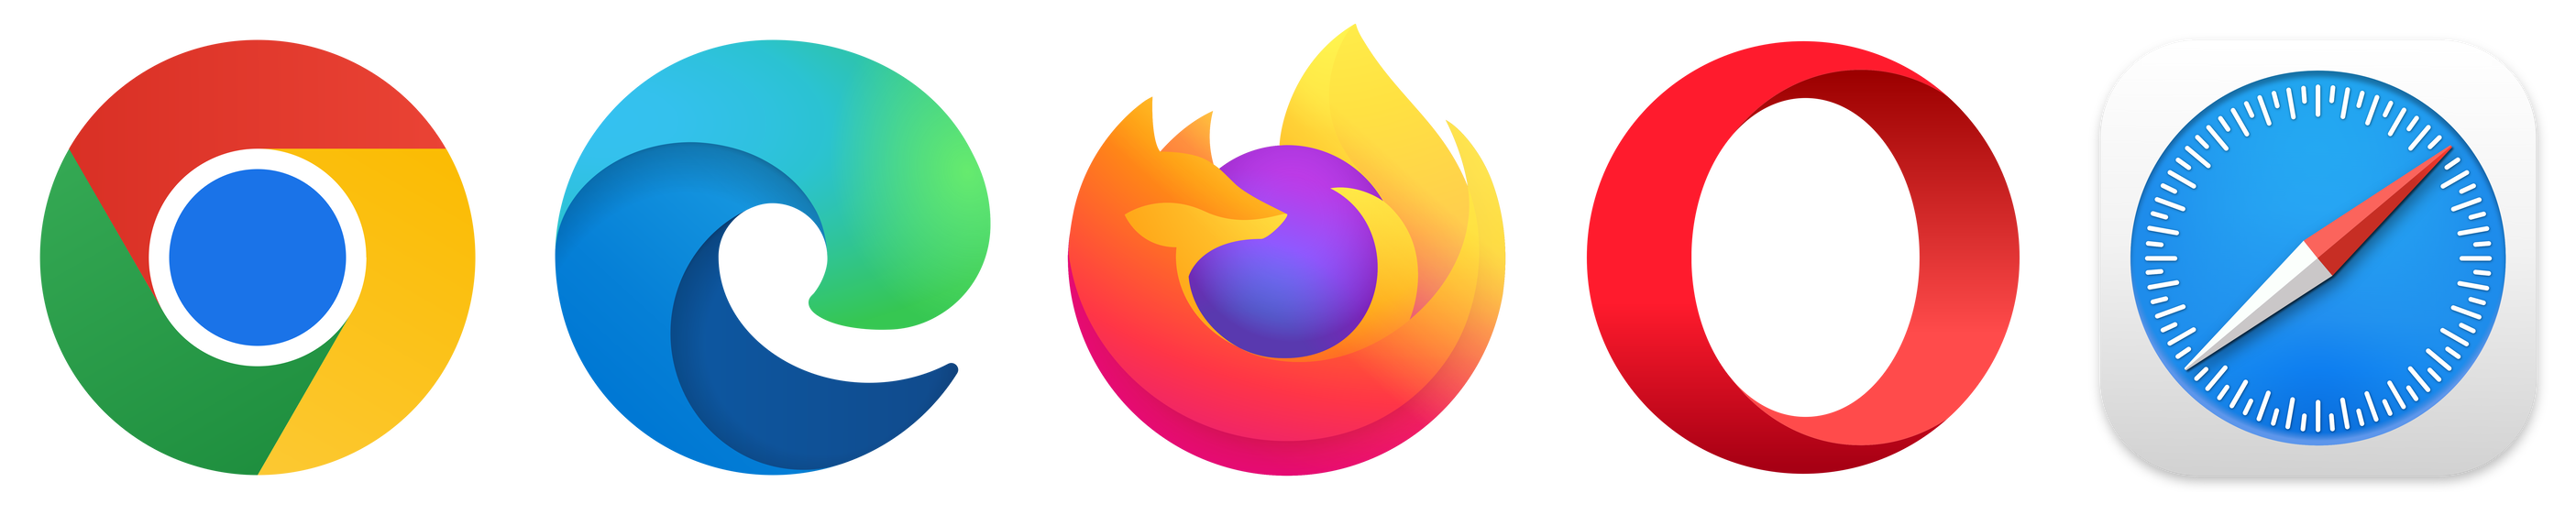 main-desktop-browser-logos